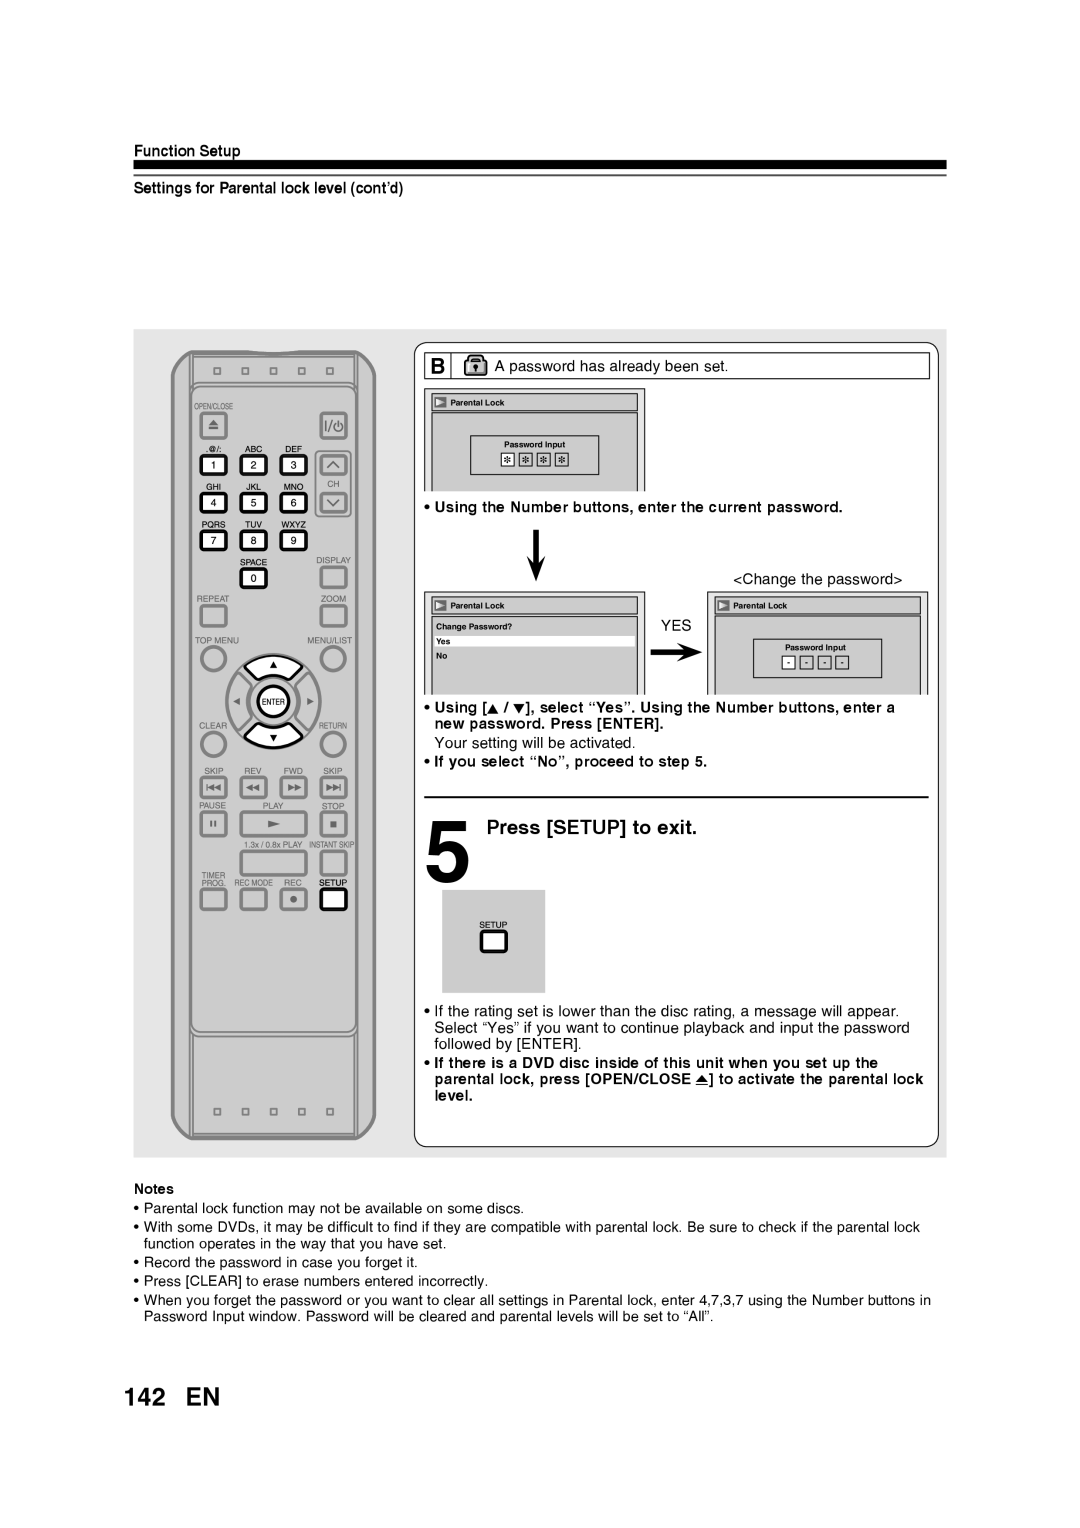 Toshiba D-RW2SU/D-RW2SC manual 142 EN, Function Setup Settings for Parental lock level cont’d, Press SETUP to exit 